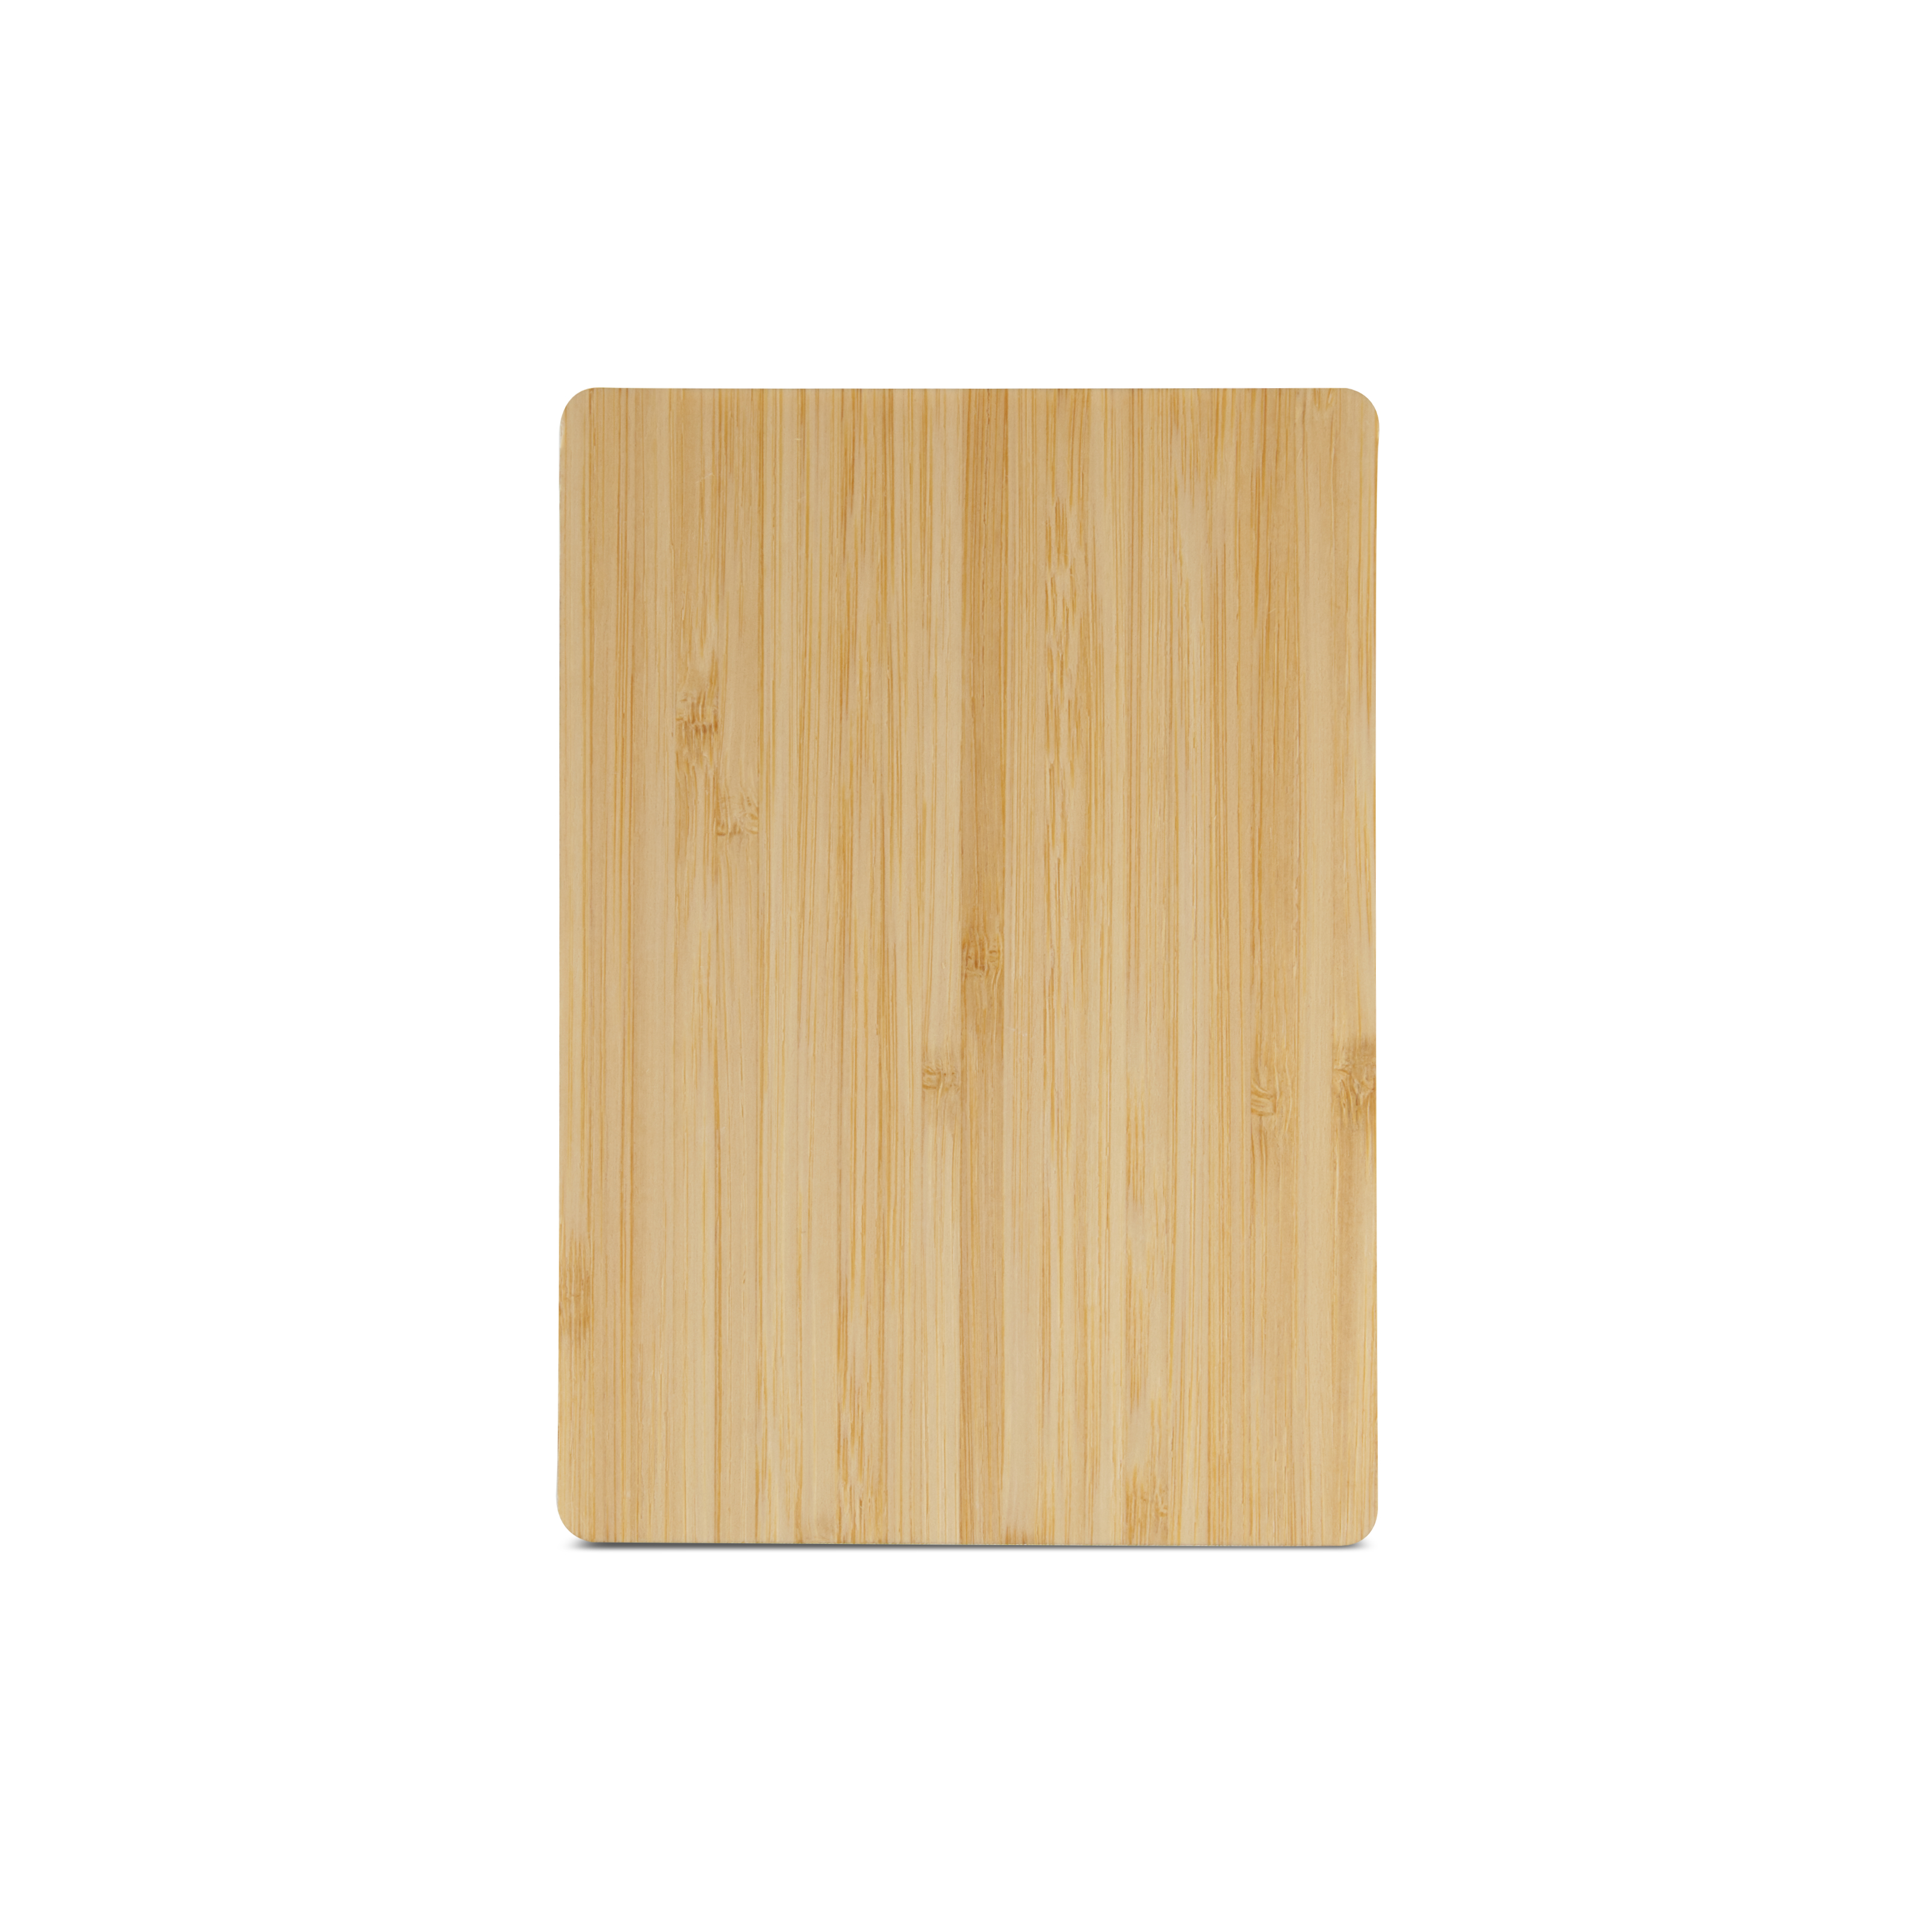 NFC plate bamboo - A6 - NTAG213 - 180 bytes - wood look